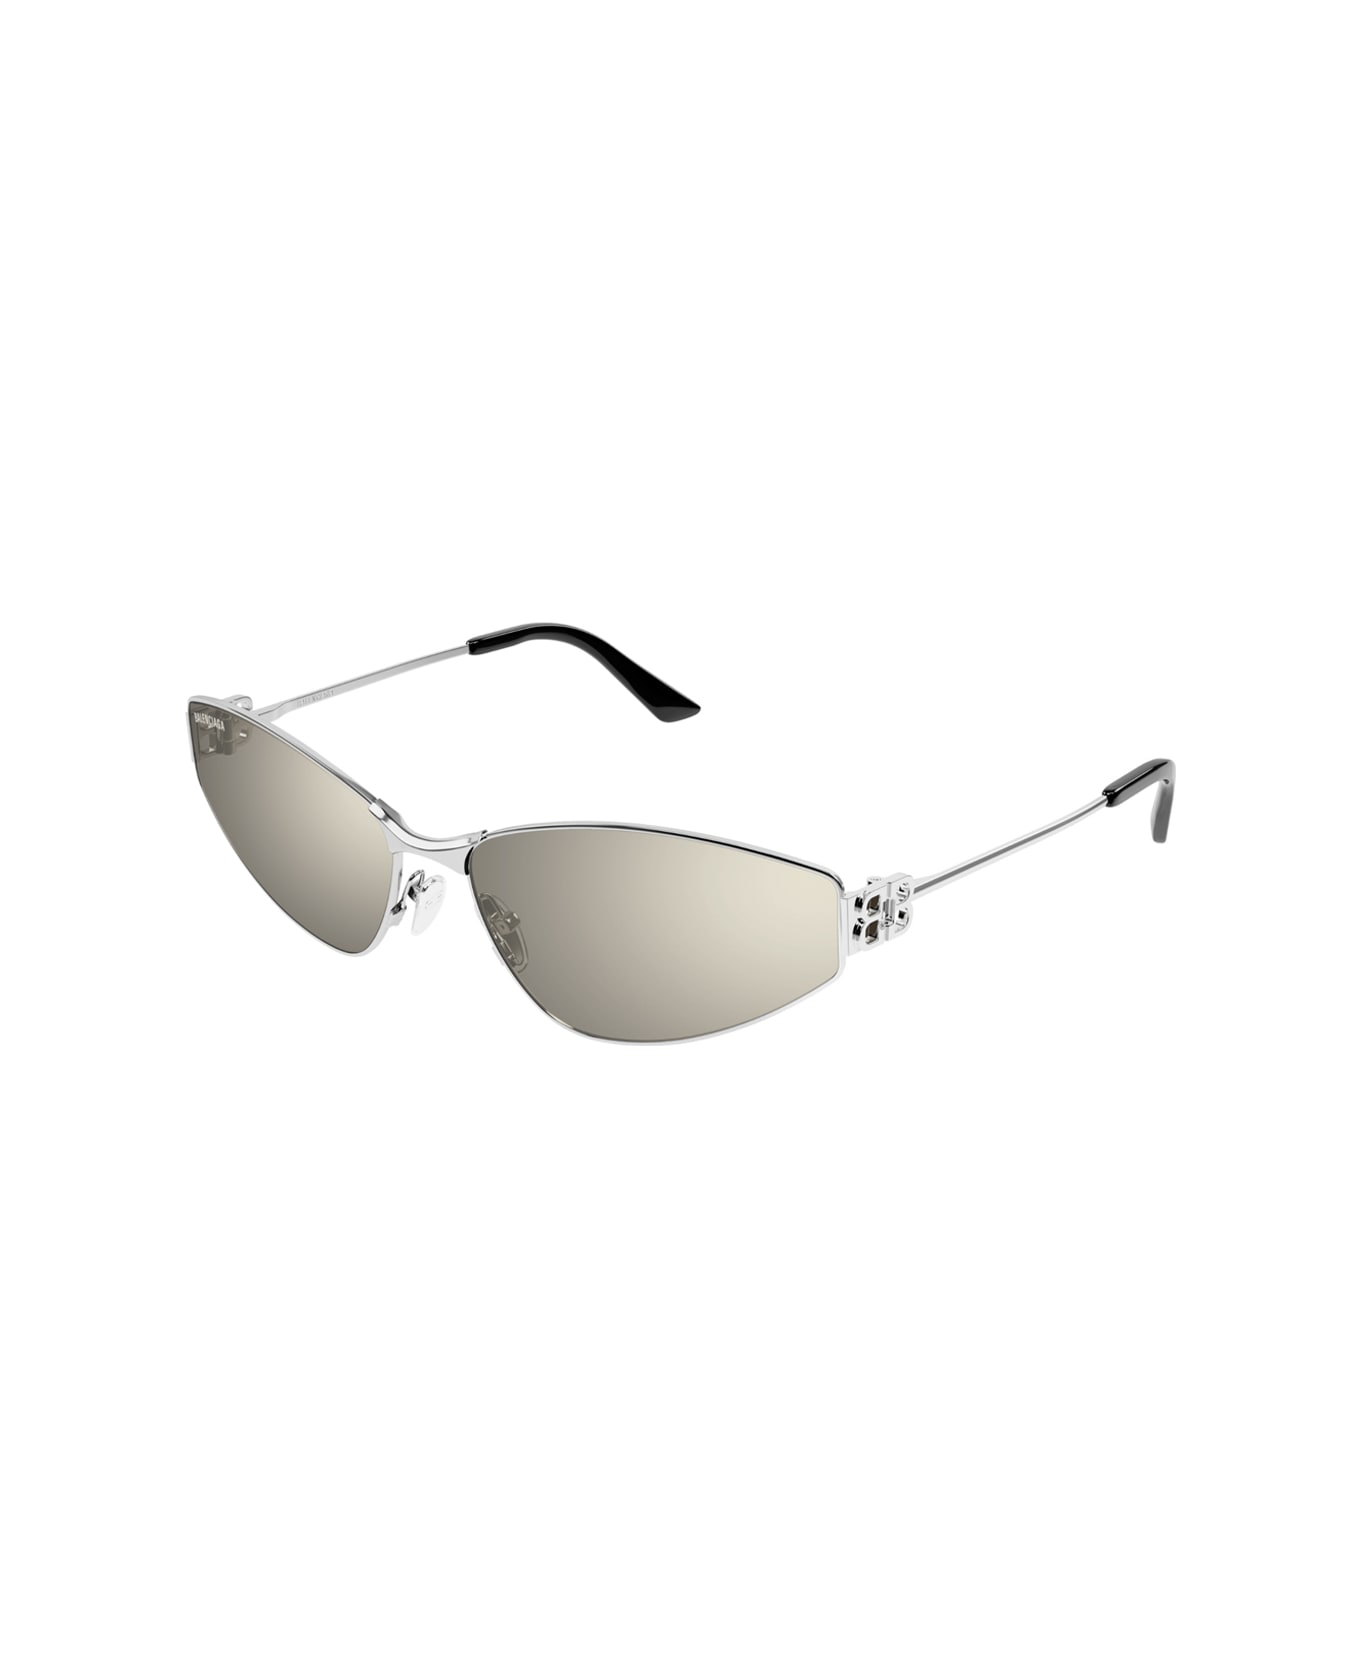 Balenciaga Eyewear Bb0335s Mercury-linea Everyday 006 Sunglasses - Argento